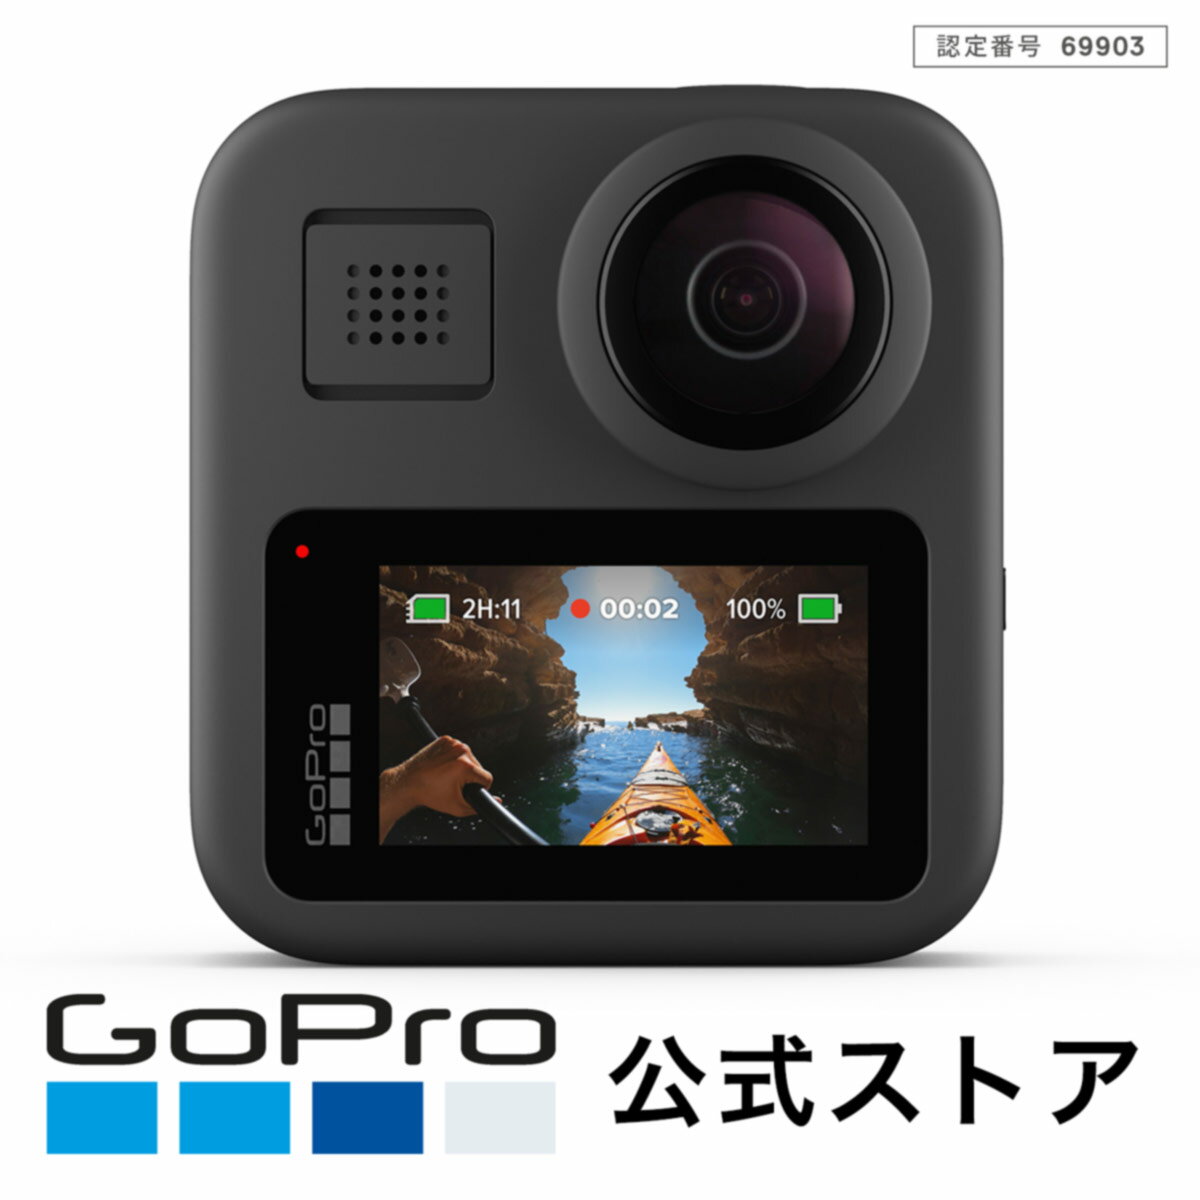 GoPro MAX CHDHZ-201-FW + 公式ストア限定 非売品ステッカーセット